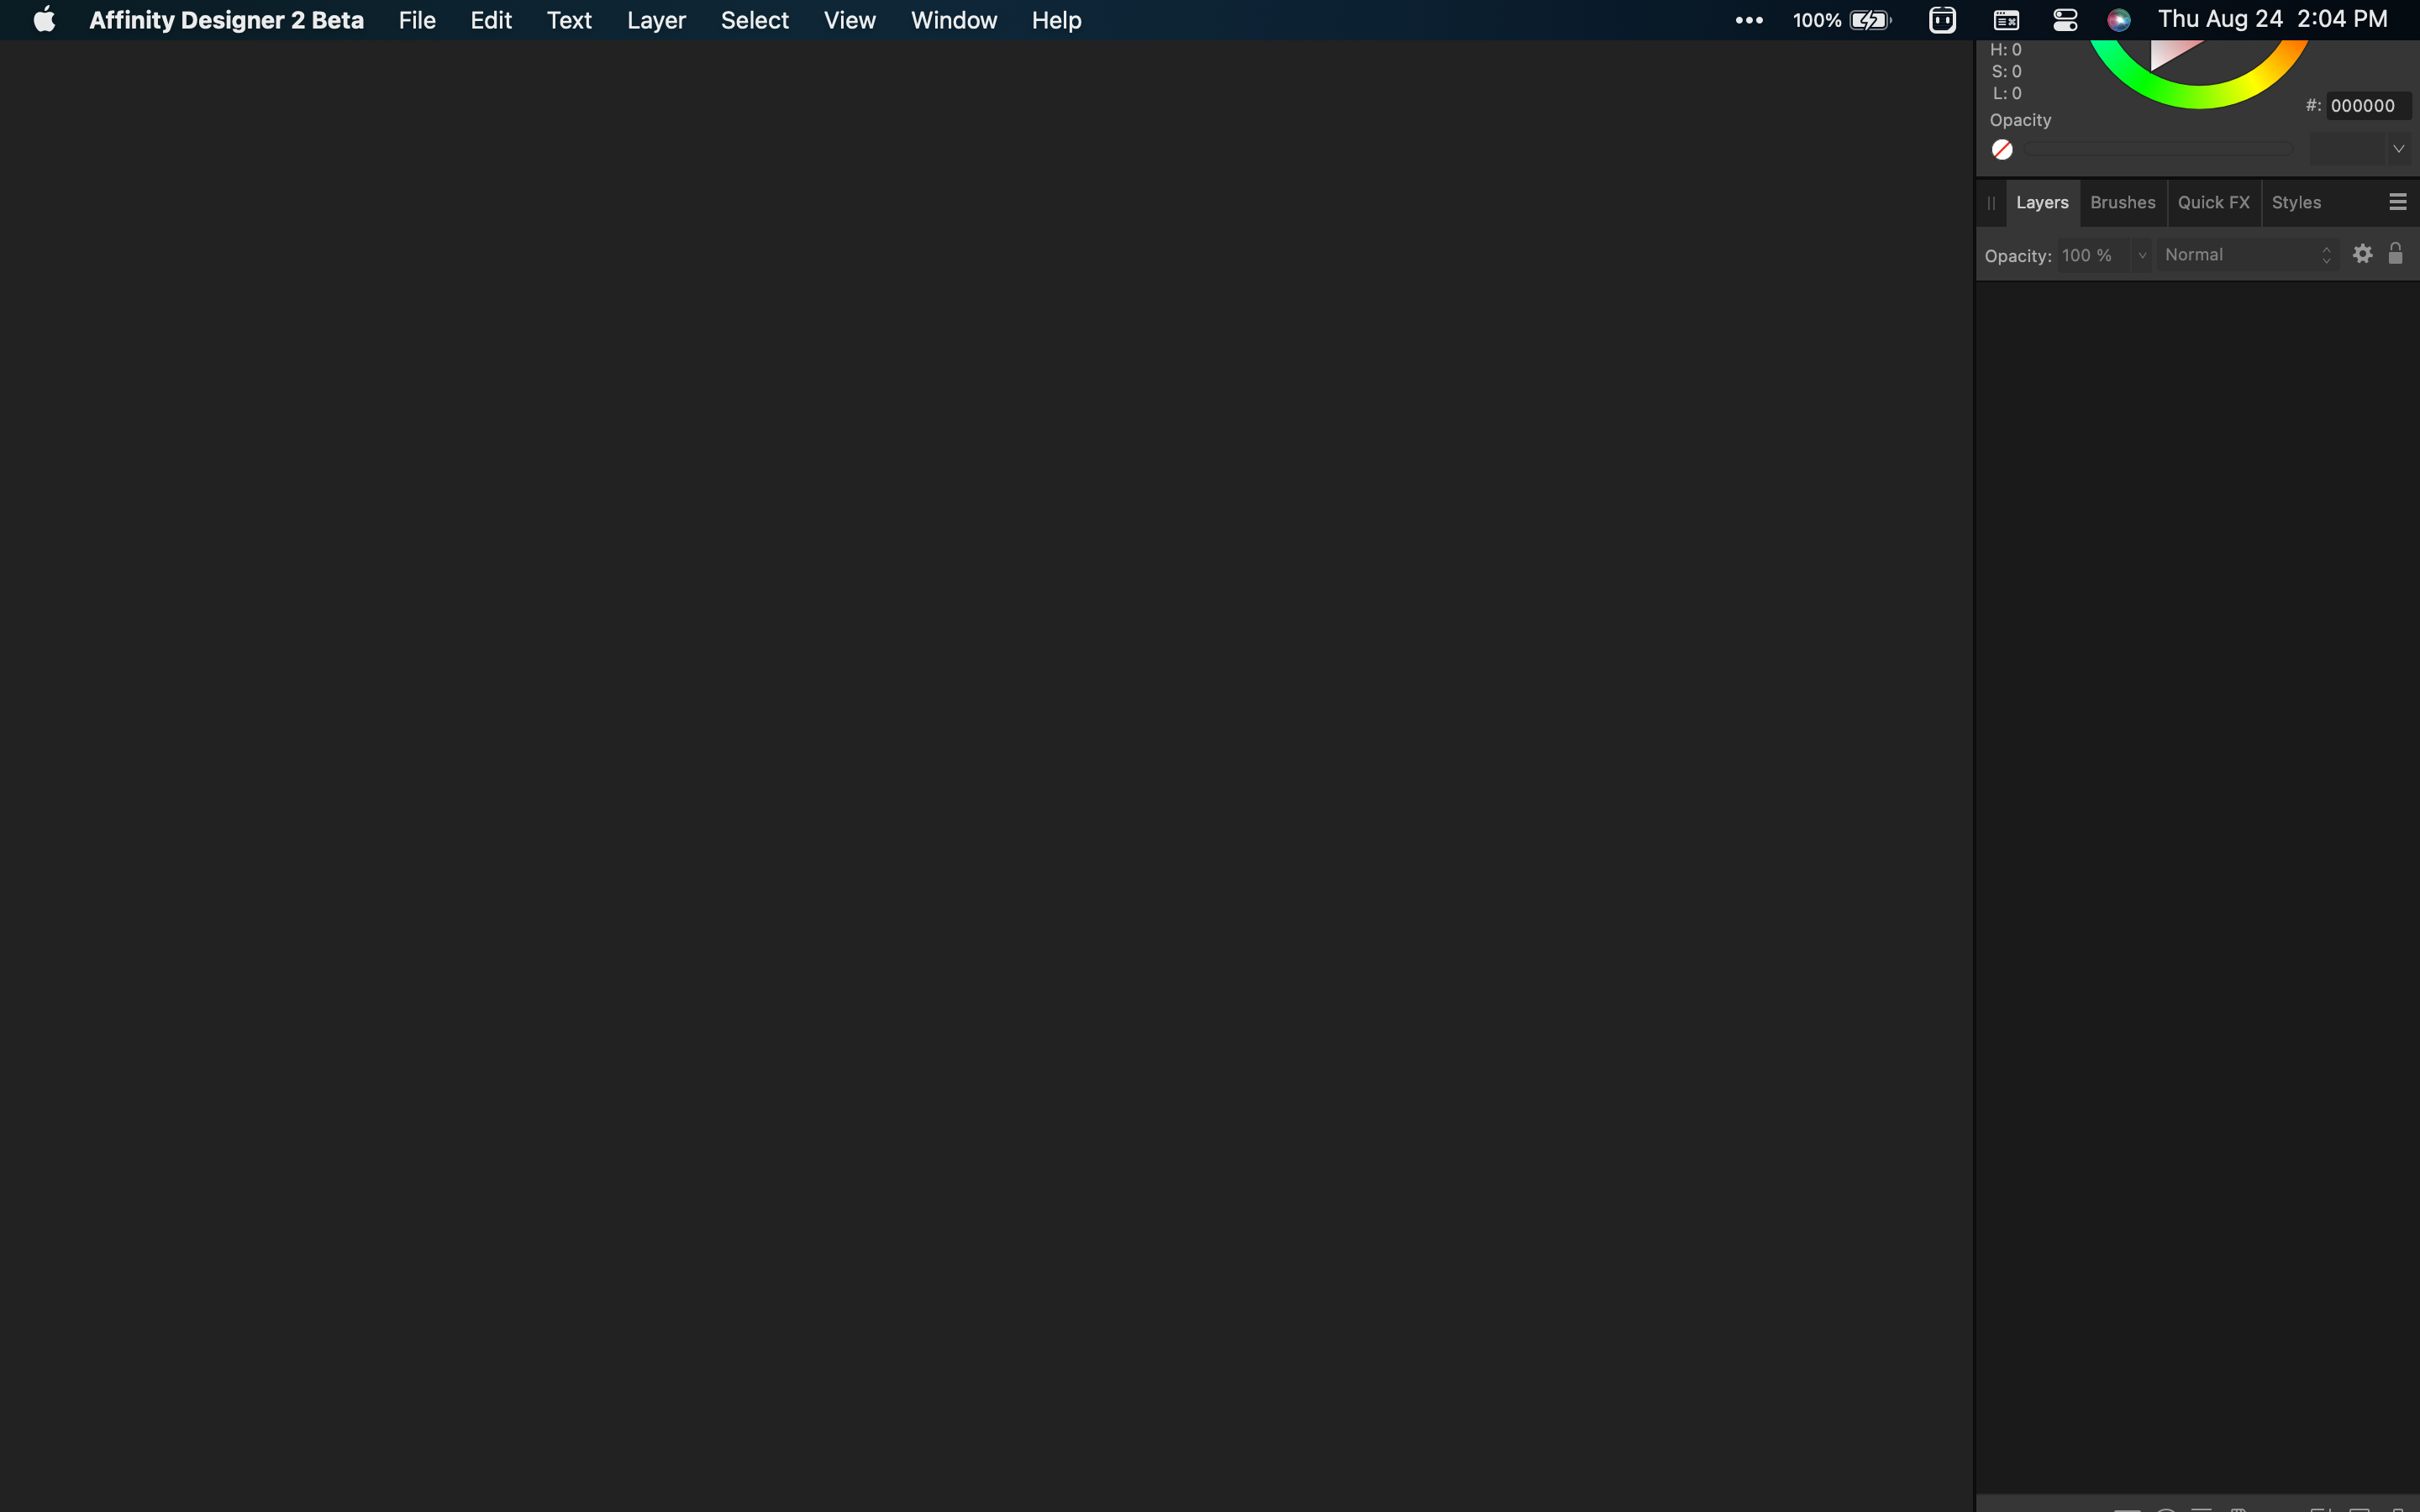 Studio is stuck during login on Mac - Platform Usage Support - Developer  Forum